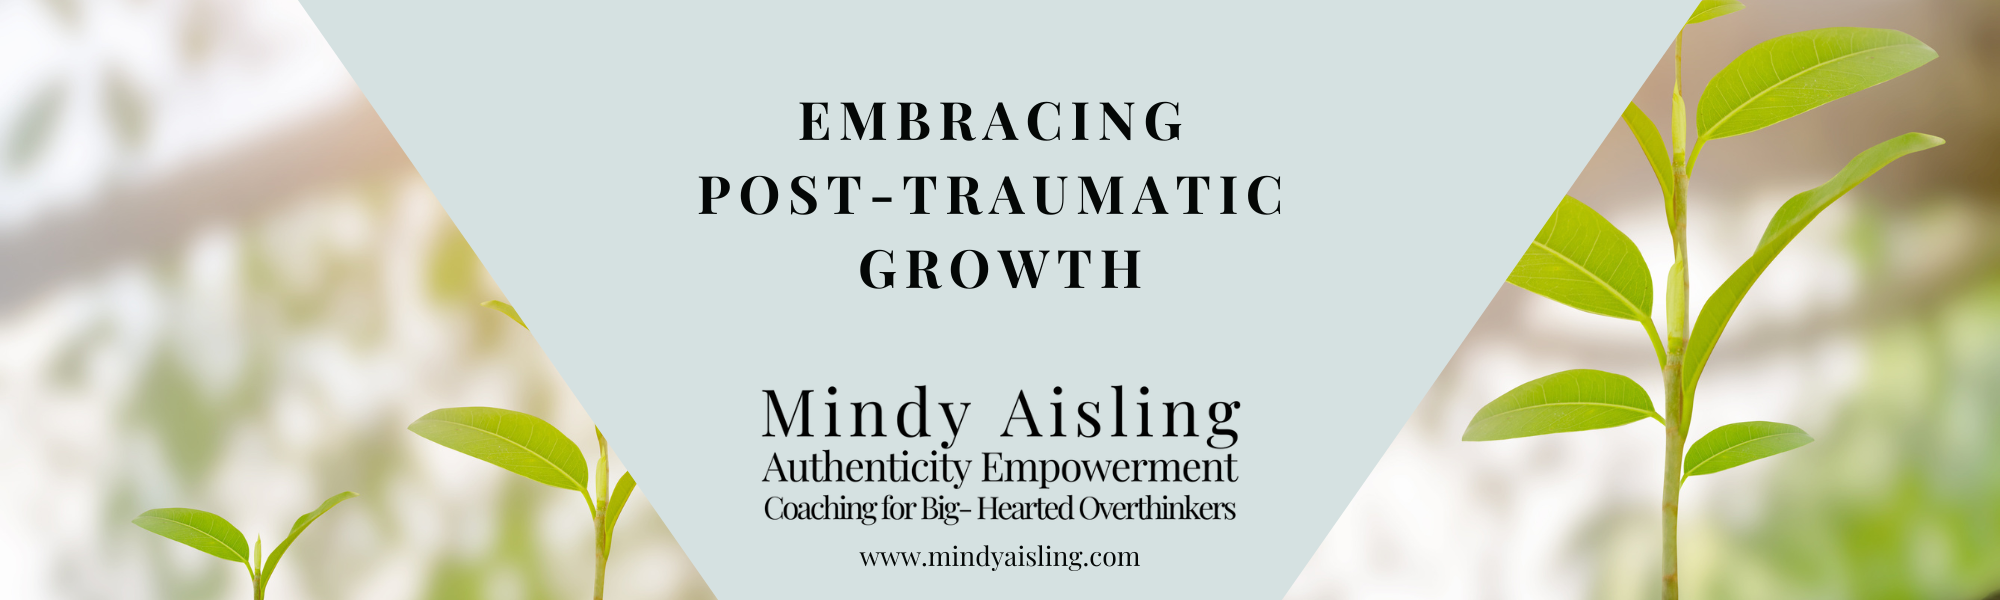 Embracing Post-Traumatic Growth